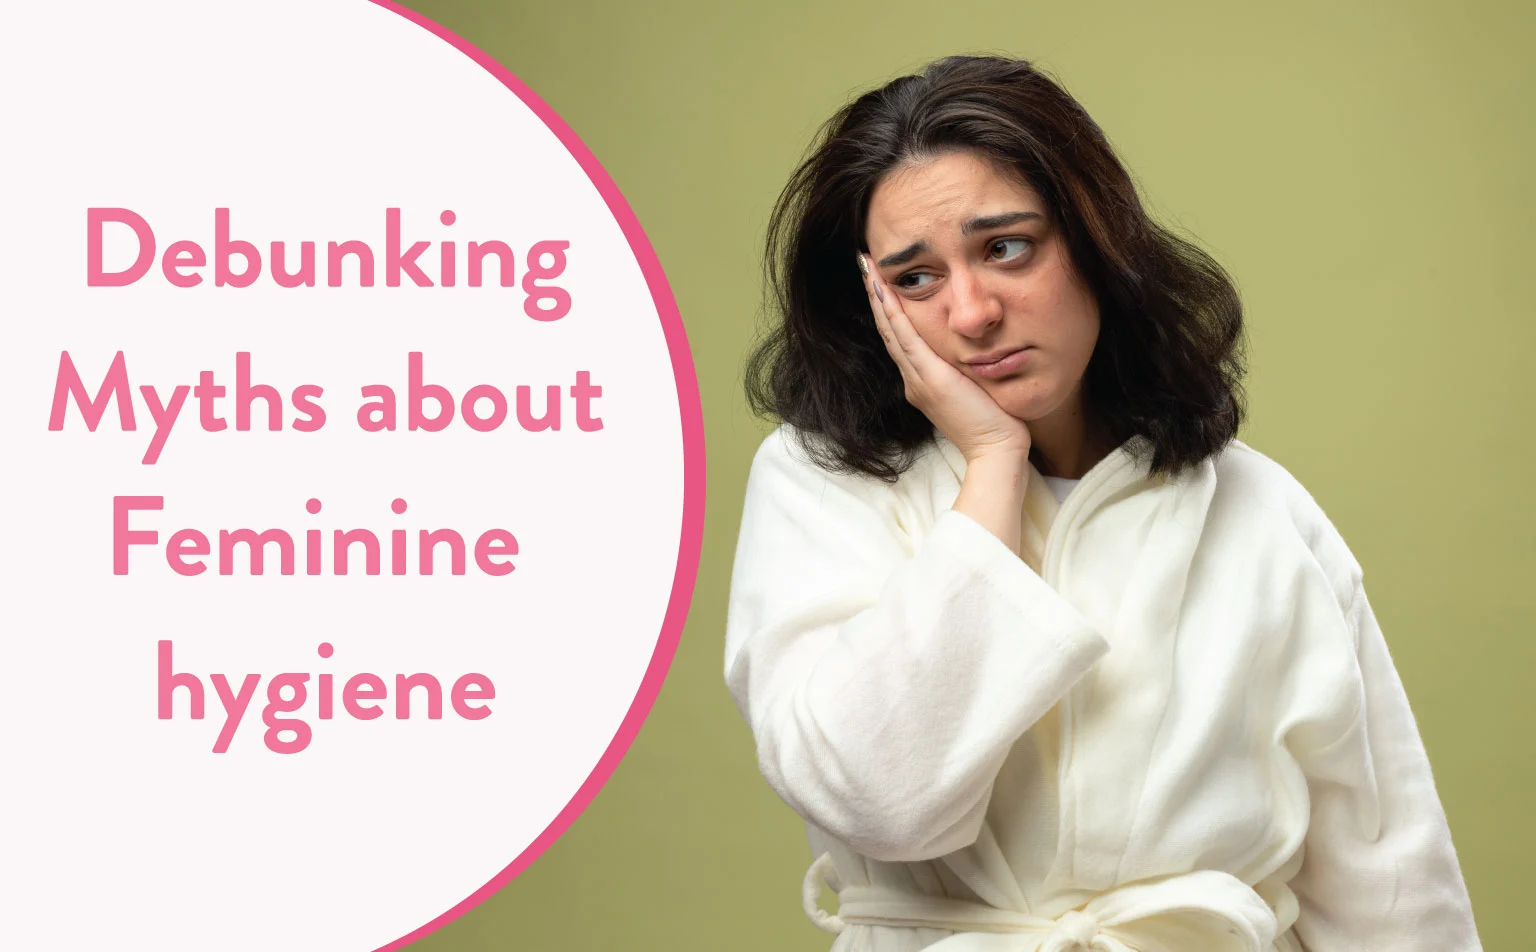 Debunking myths about feminine hygiene